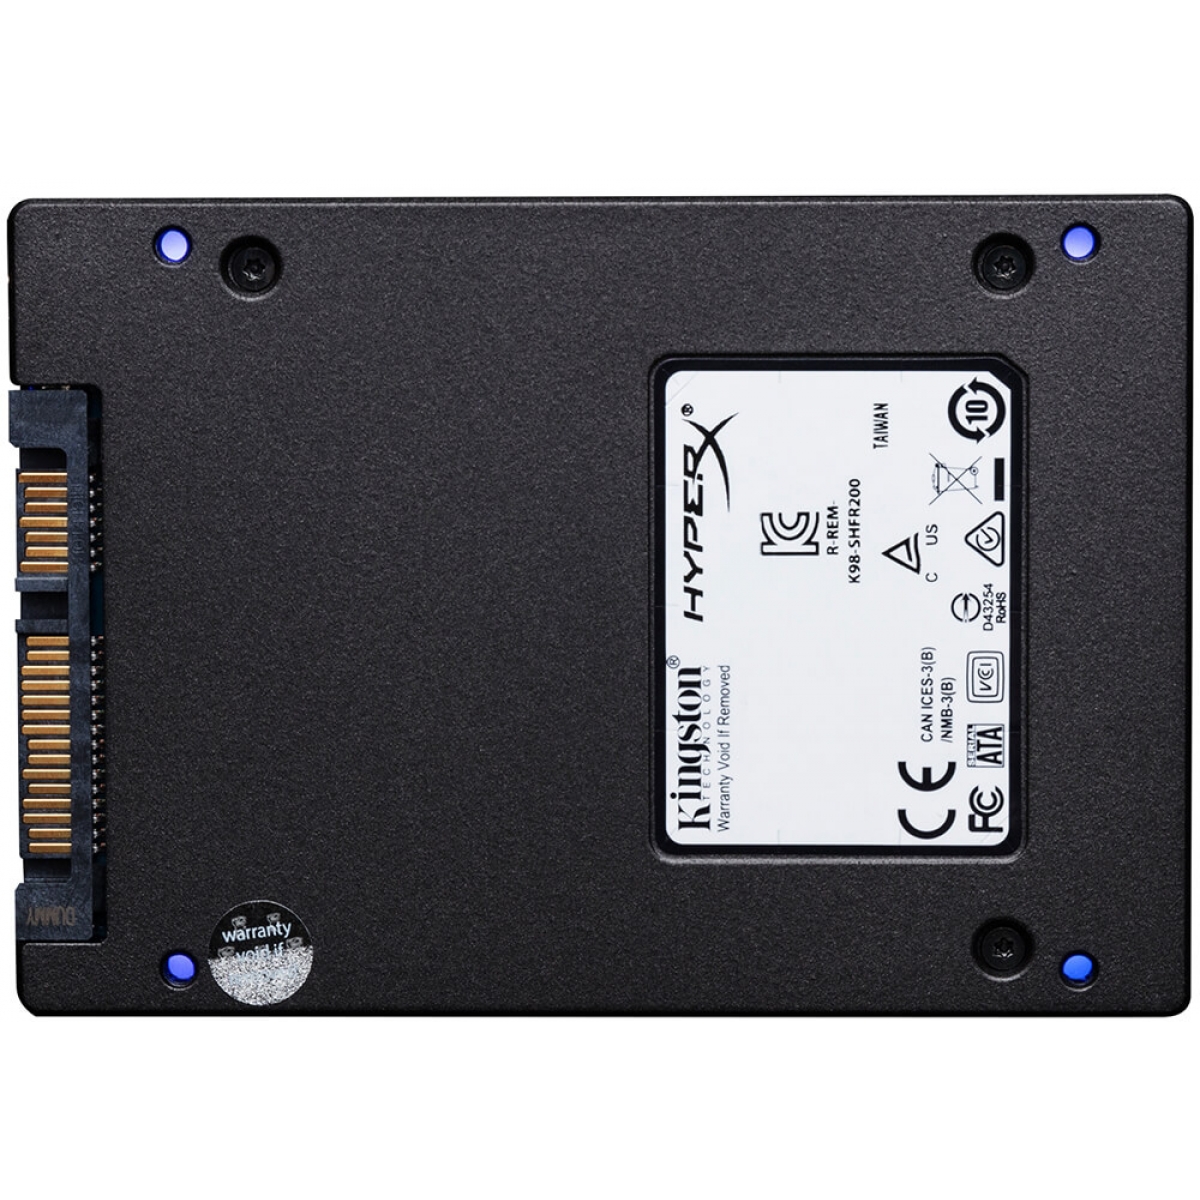 SSD Kingston Hyperx Fury RGB, 960GB, Sata III, Leitura 550MBs e Gravação 480MBs, SHFR200/960G